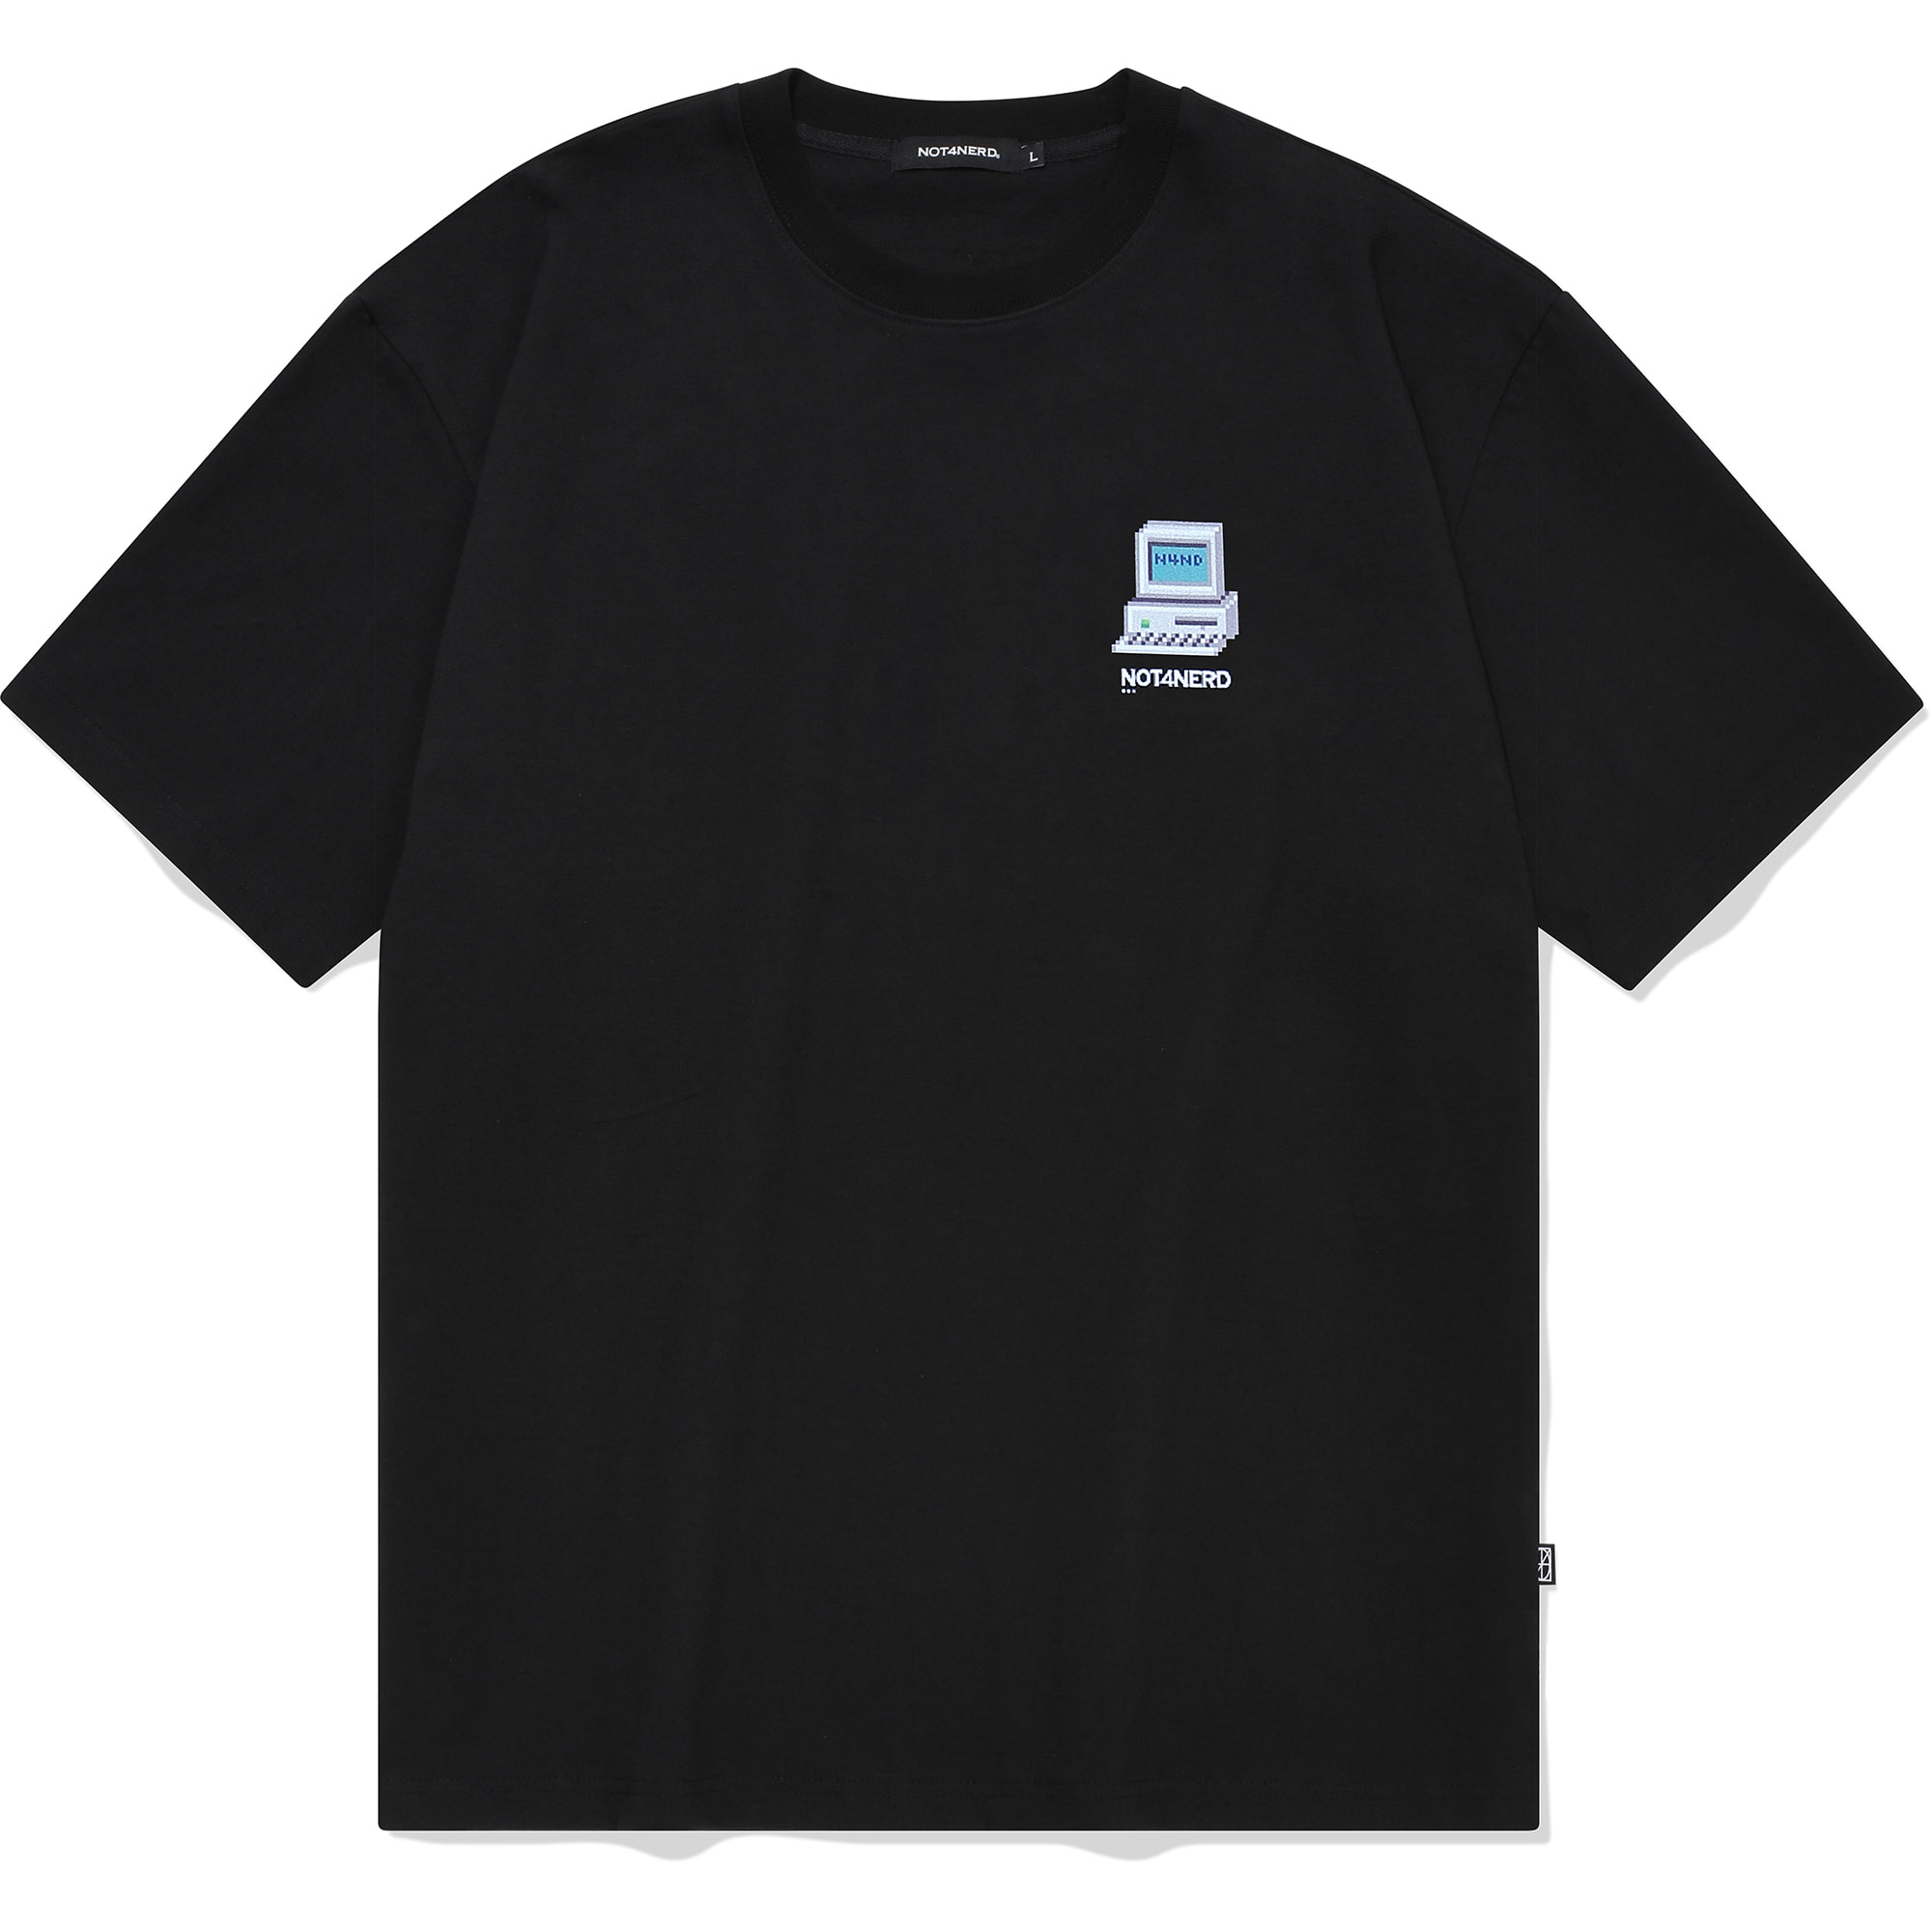 Dot Pc T-Shirts Black,NOT4NERD